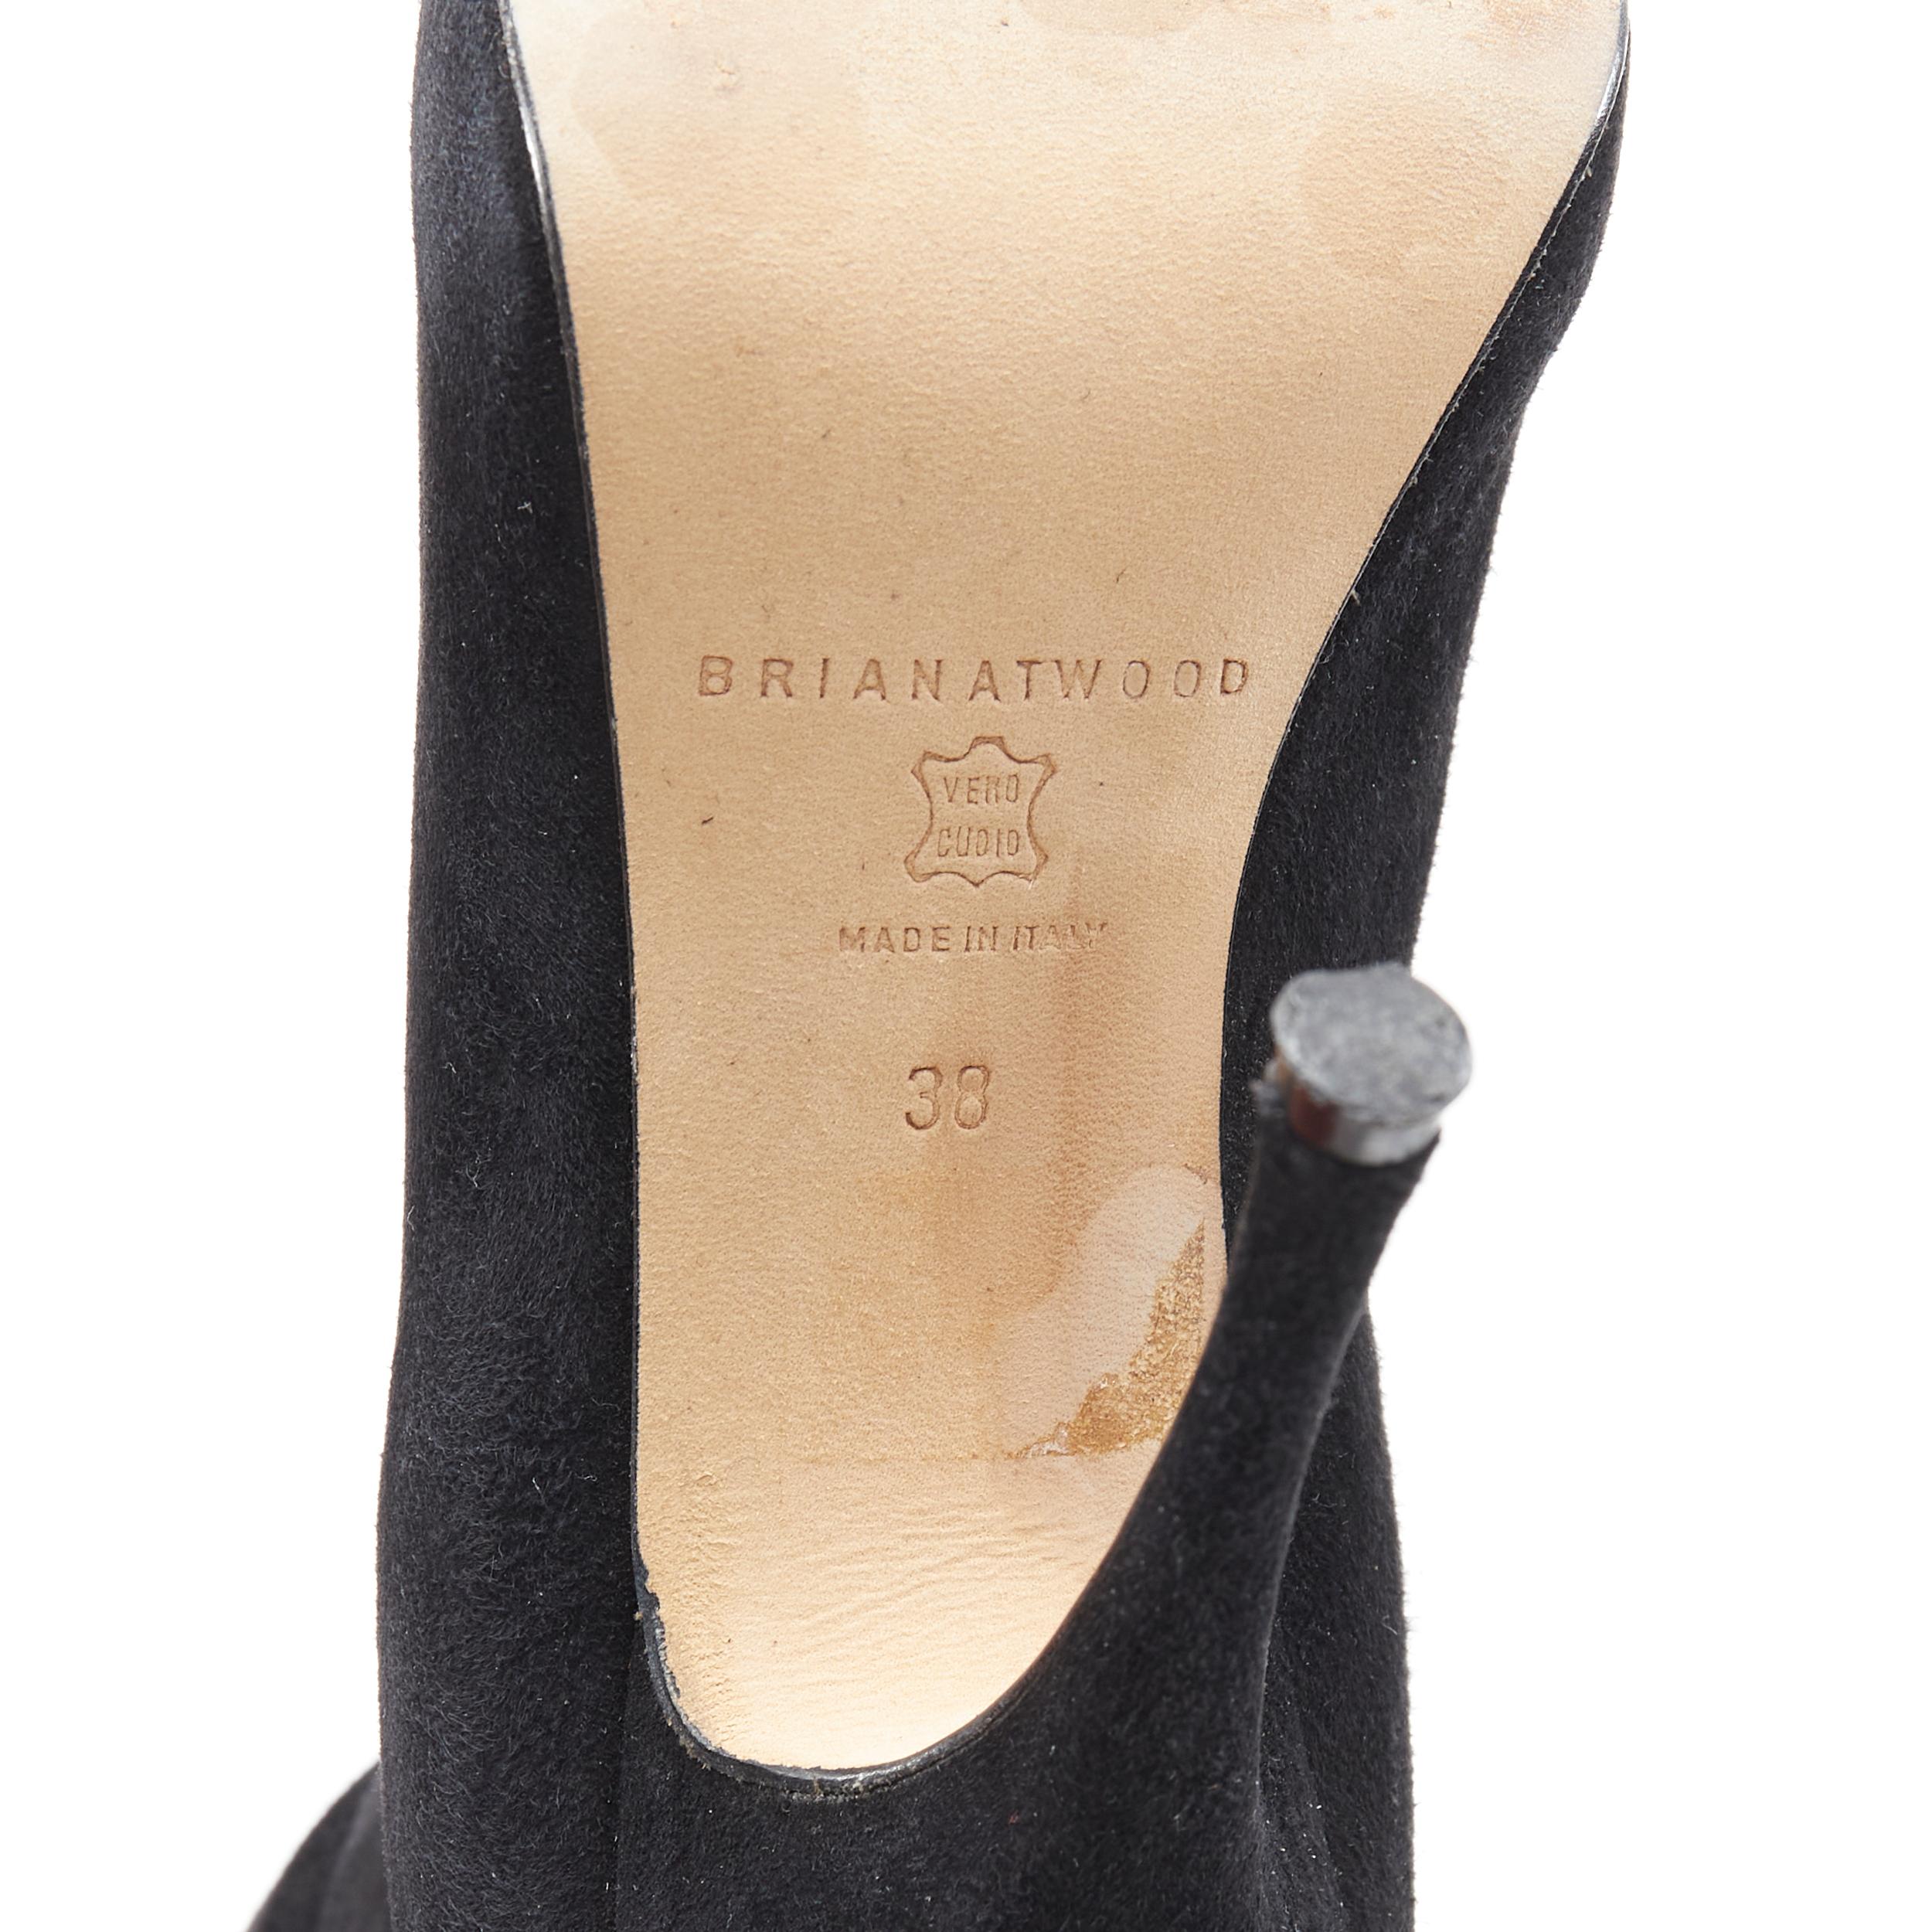 BRIAN ATWOOD black suede leather platform high heel thigh high boot EU38 4